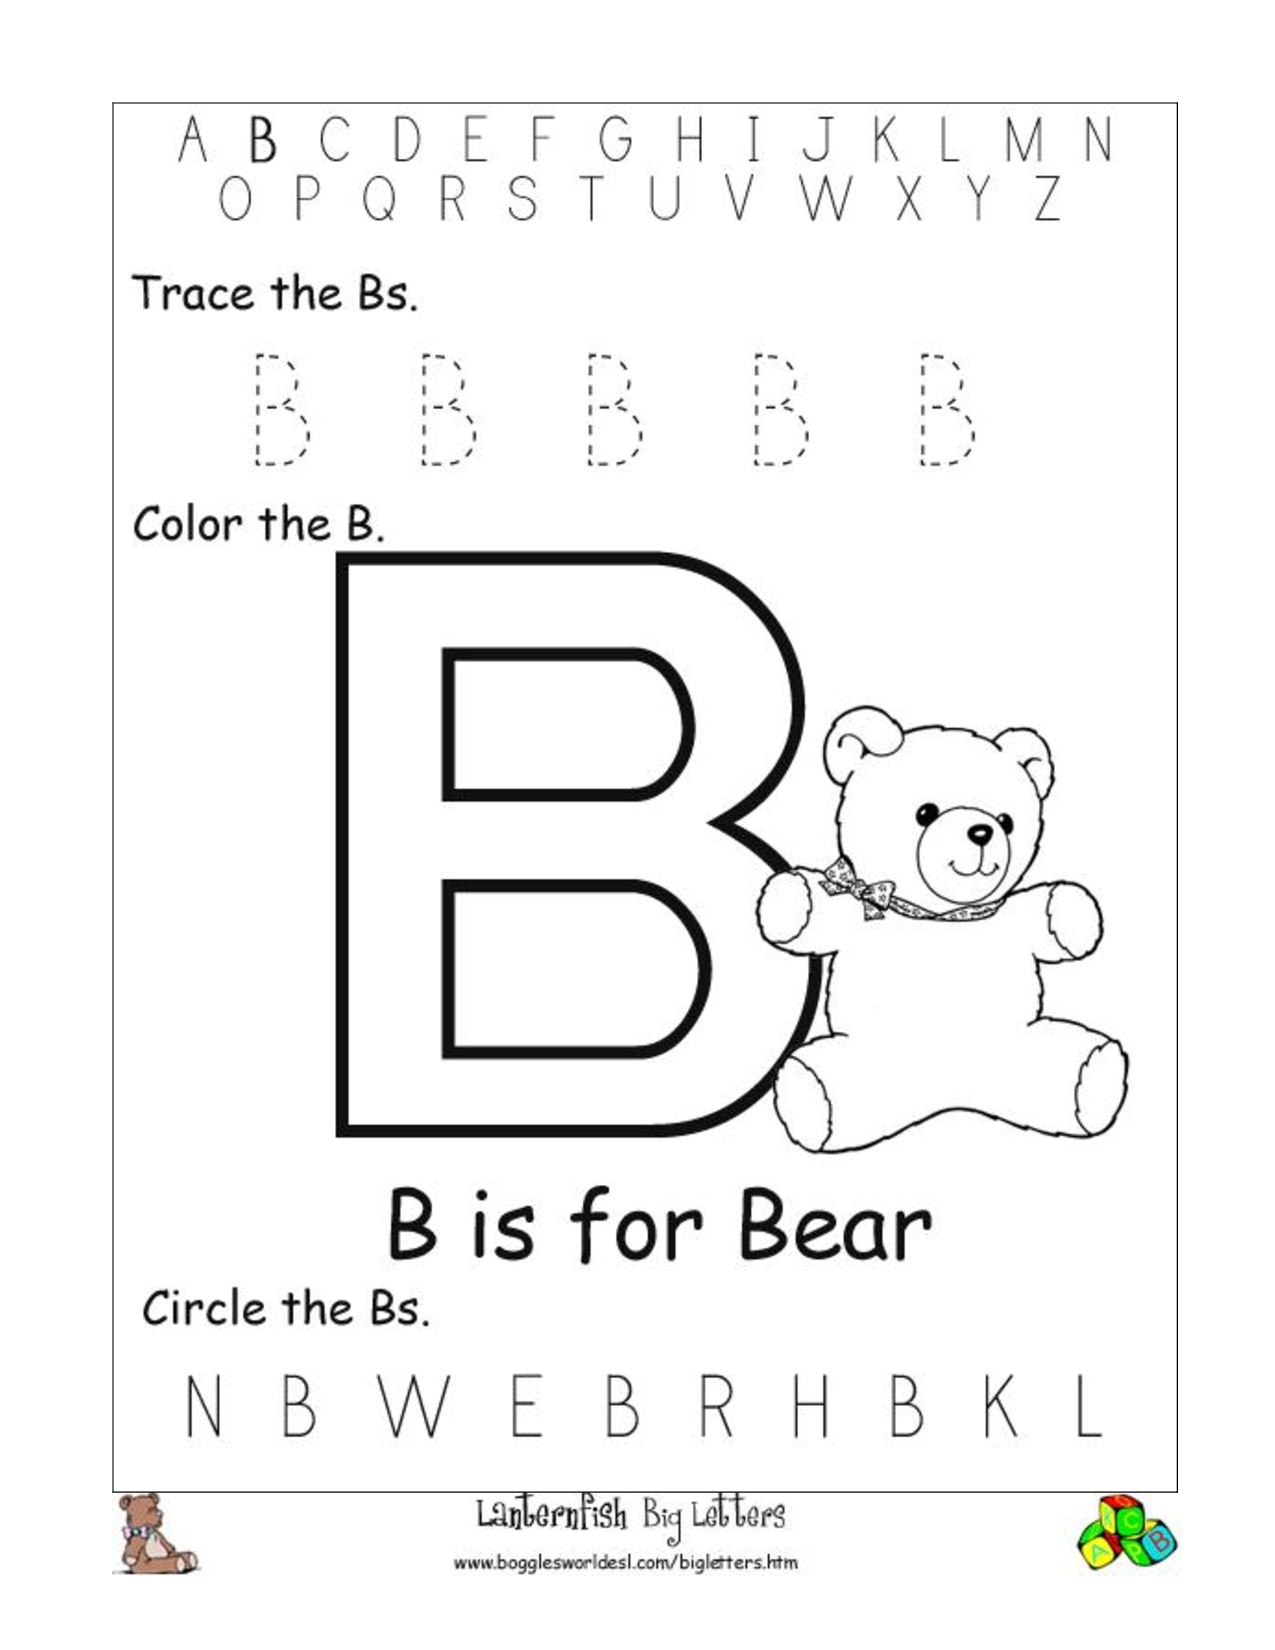 Find It. | Letter B Worksheets, Alphabet Tracing Worksheets throughout Letter B Worksheets For Toddlers